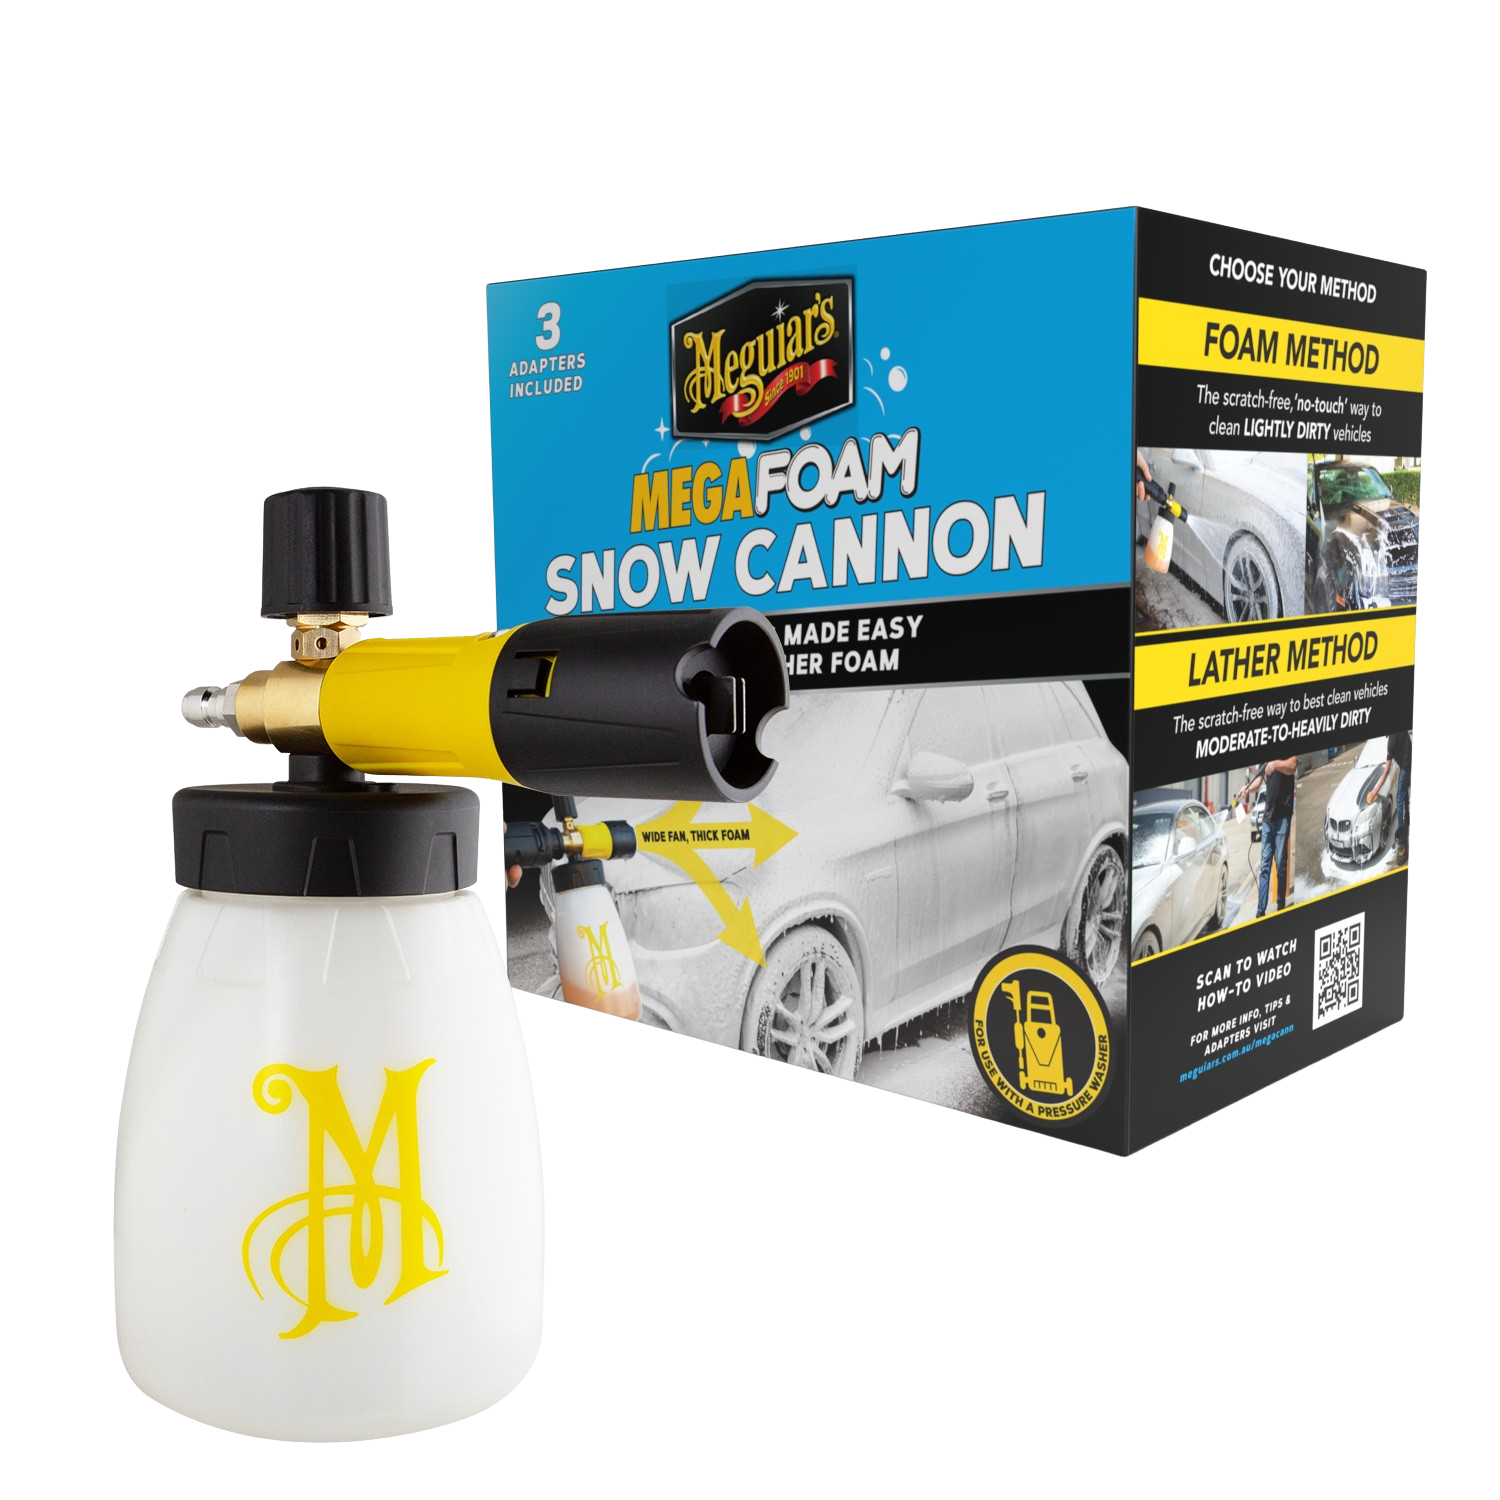 How to Use a Foam Cannon (The Snow Foam Mega Guide)